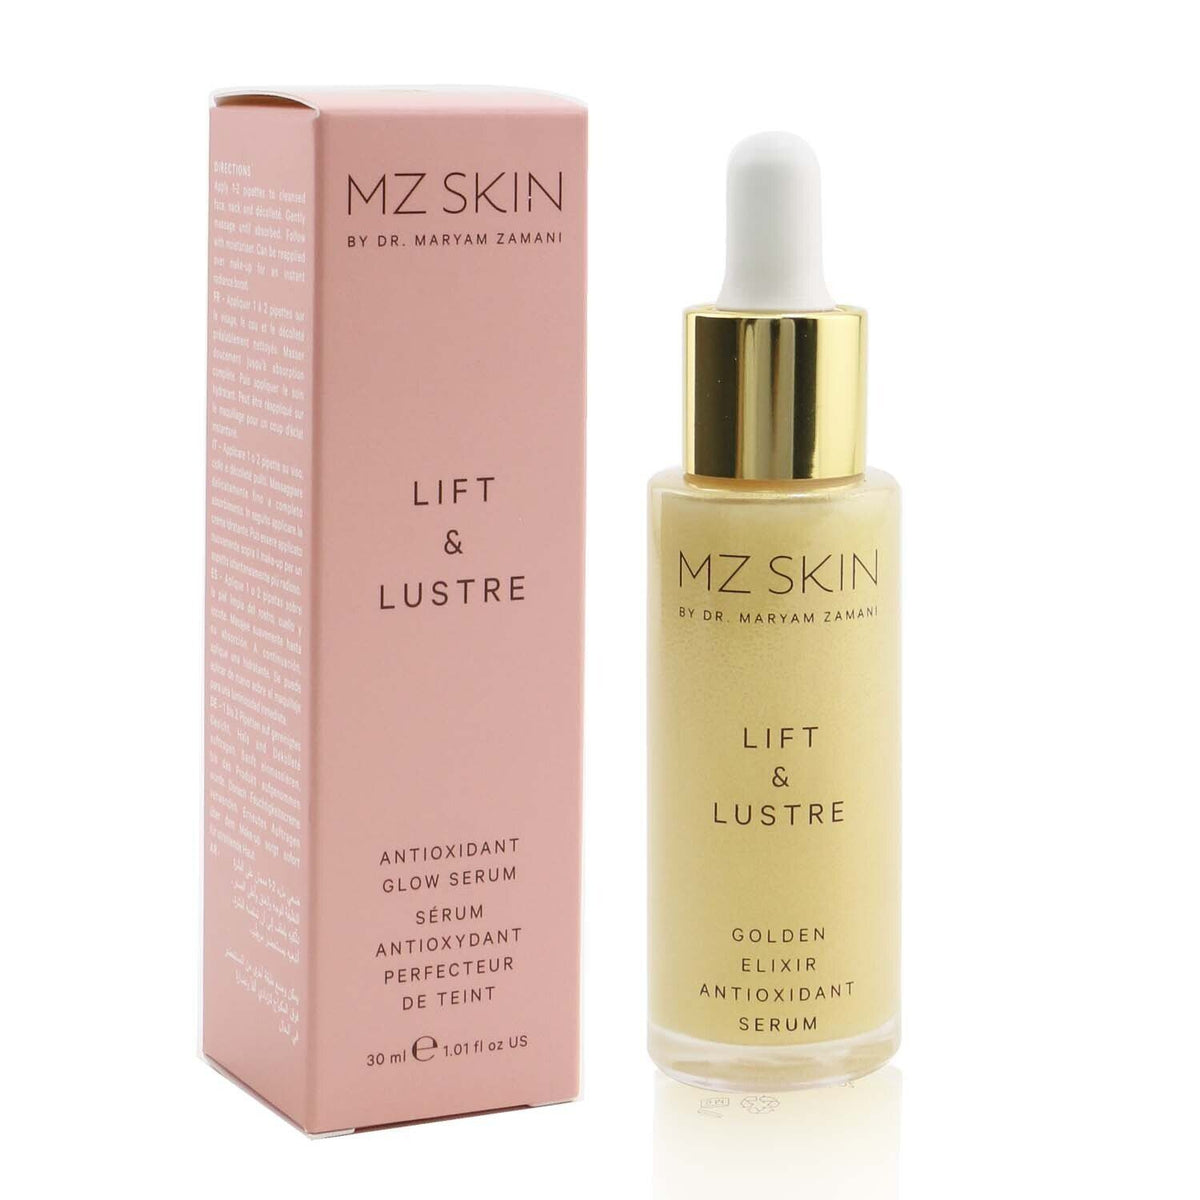 MZ SKIN - Lift & Lustre Antioxidant Glow Serum 30ml/1.01oz - Premium Moisturizer from Doba - Just $320! Shop now at Ida Louise Boutique